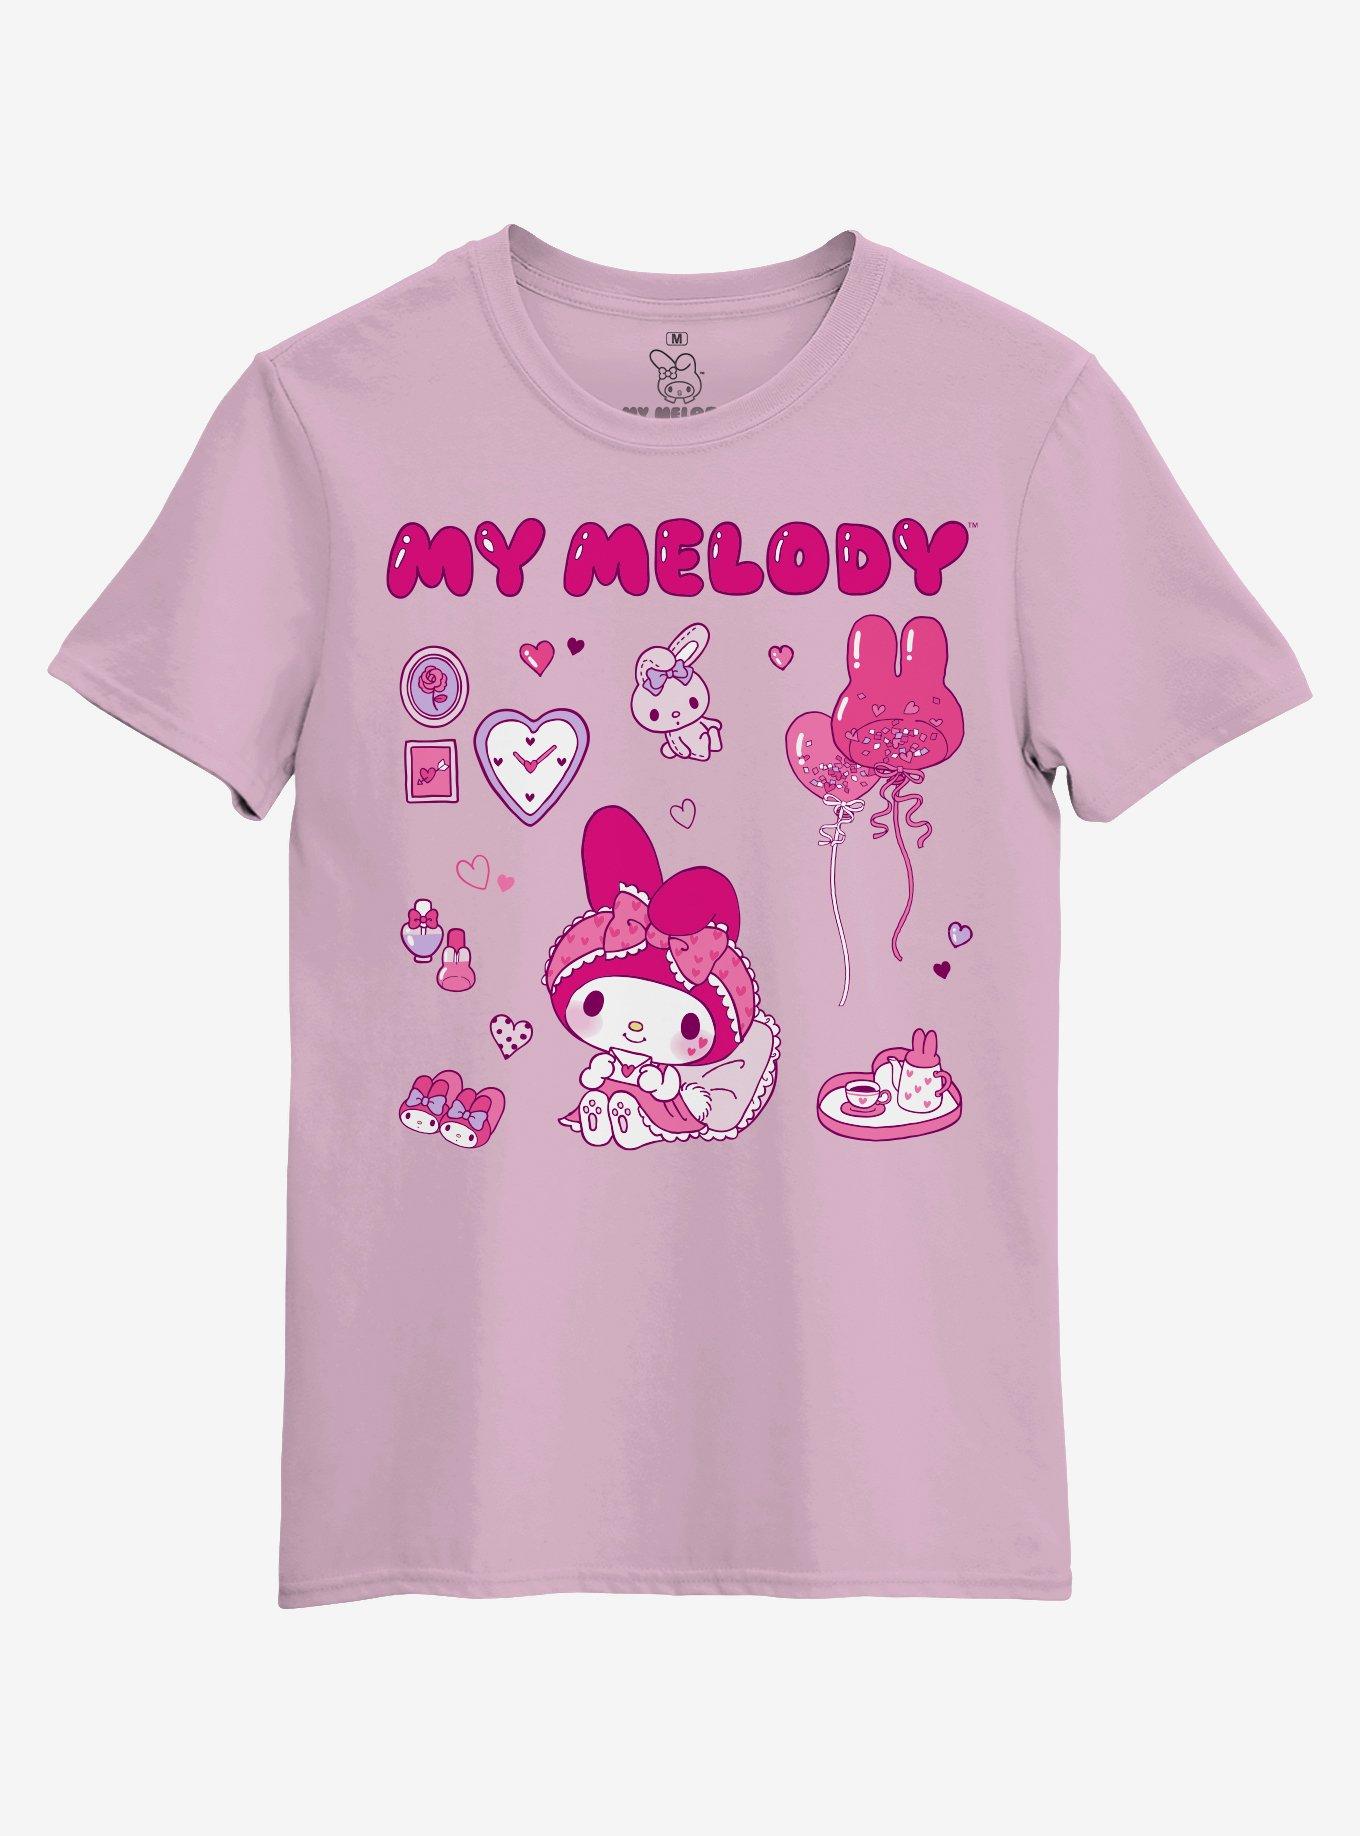 My Melody Sleepover Boyfriend Fit Girls T-Shirt